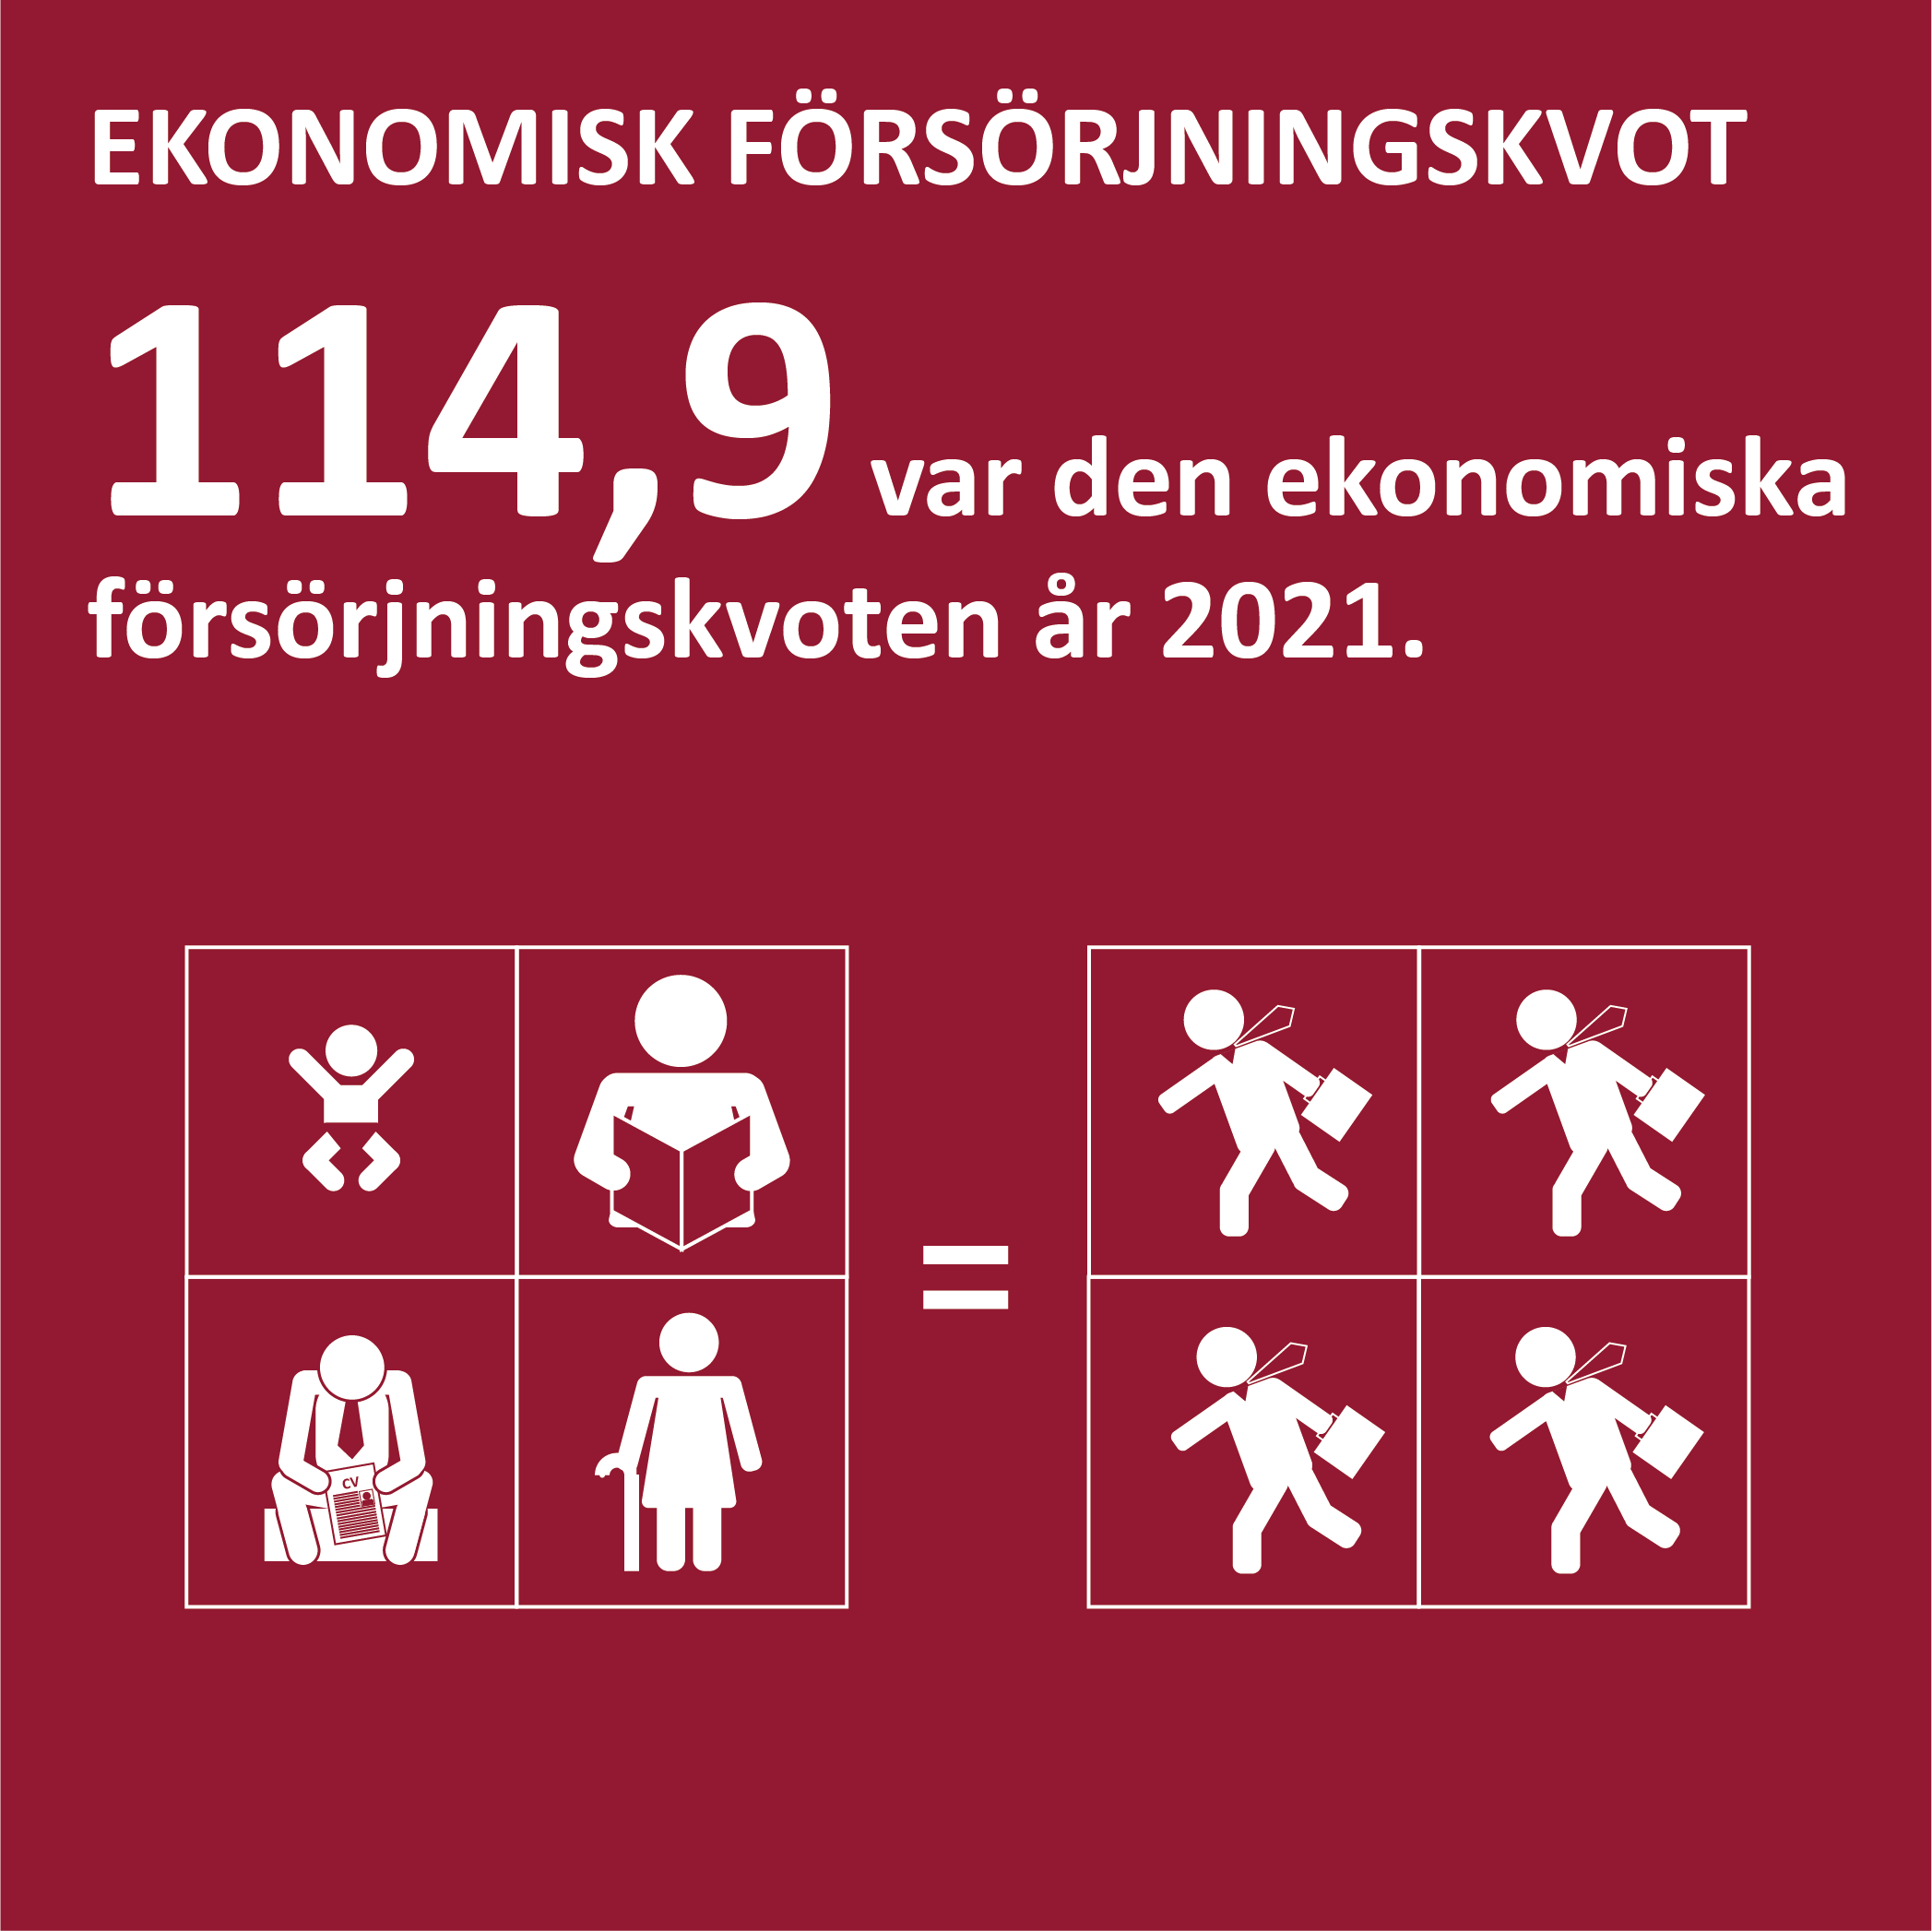 Infografik om ekonomisk försörjningskvot på Åland